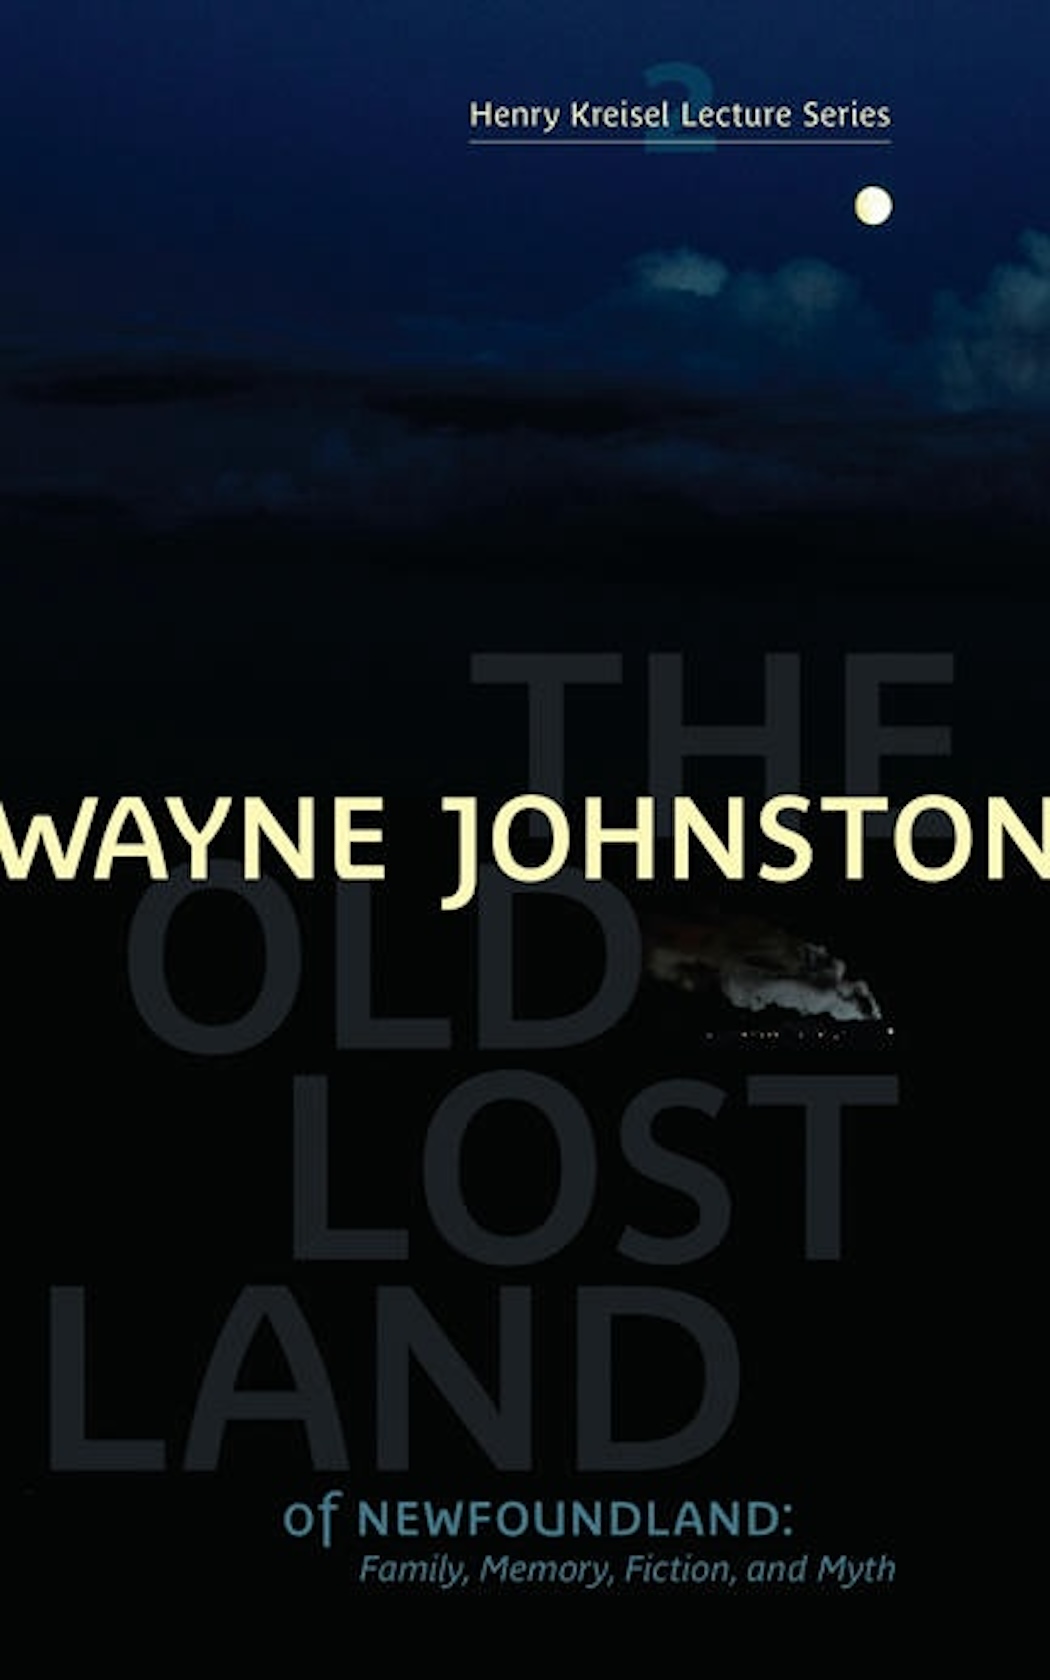 Cover Image of Wayne Johnston's Kreisel Publication Titled The Old Lost Land of Newfoundland